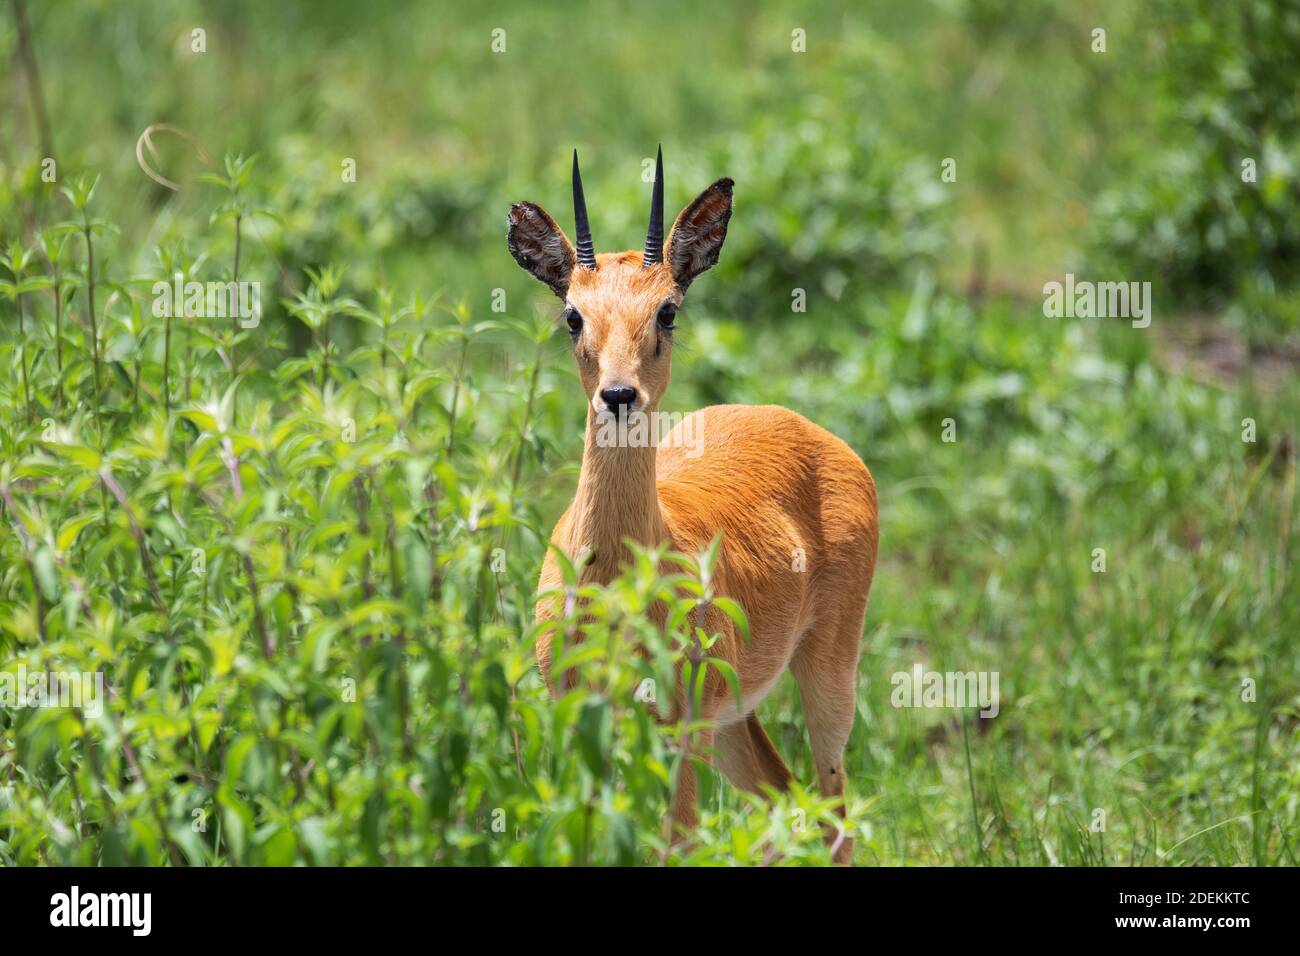 Oribi, Ourebia ourebi is cute small antelope found in eastern, southern and western Africa. Ethiopia, Senkelle Sanctuary, Africa wildlife Stock Photo